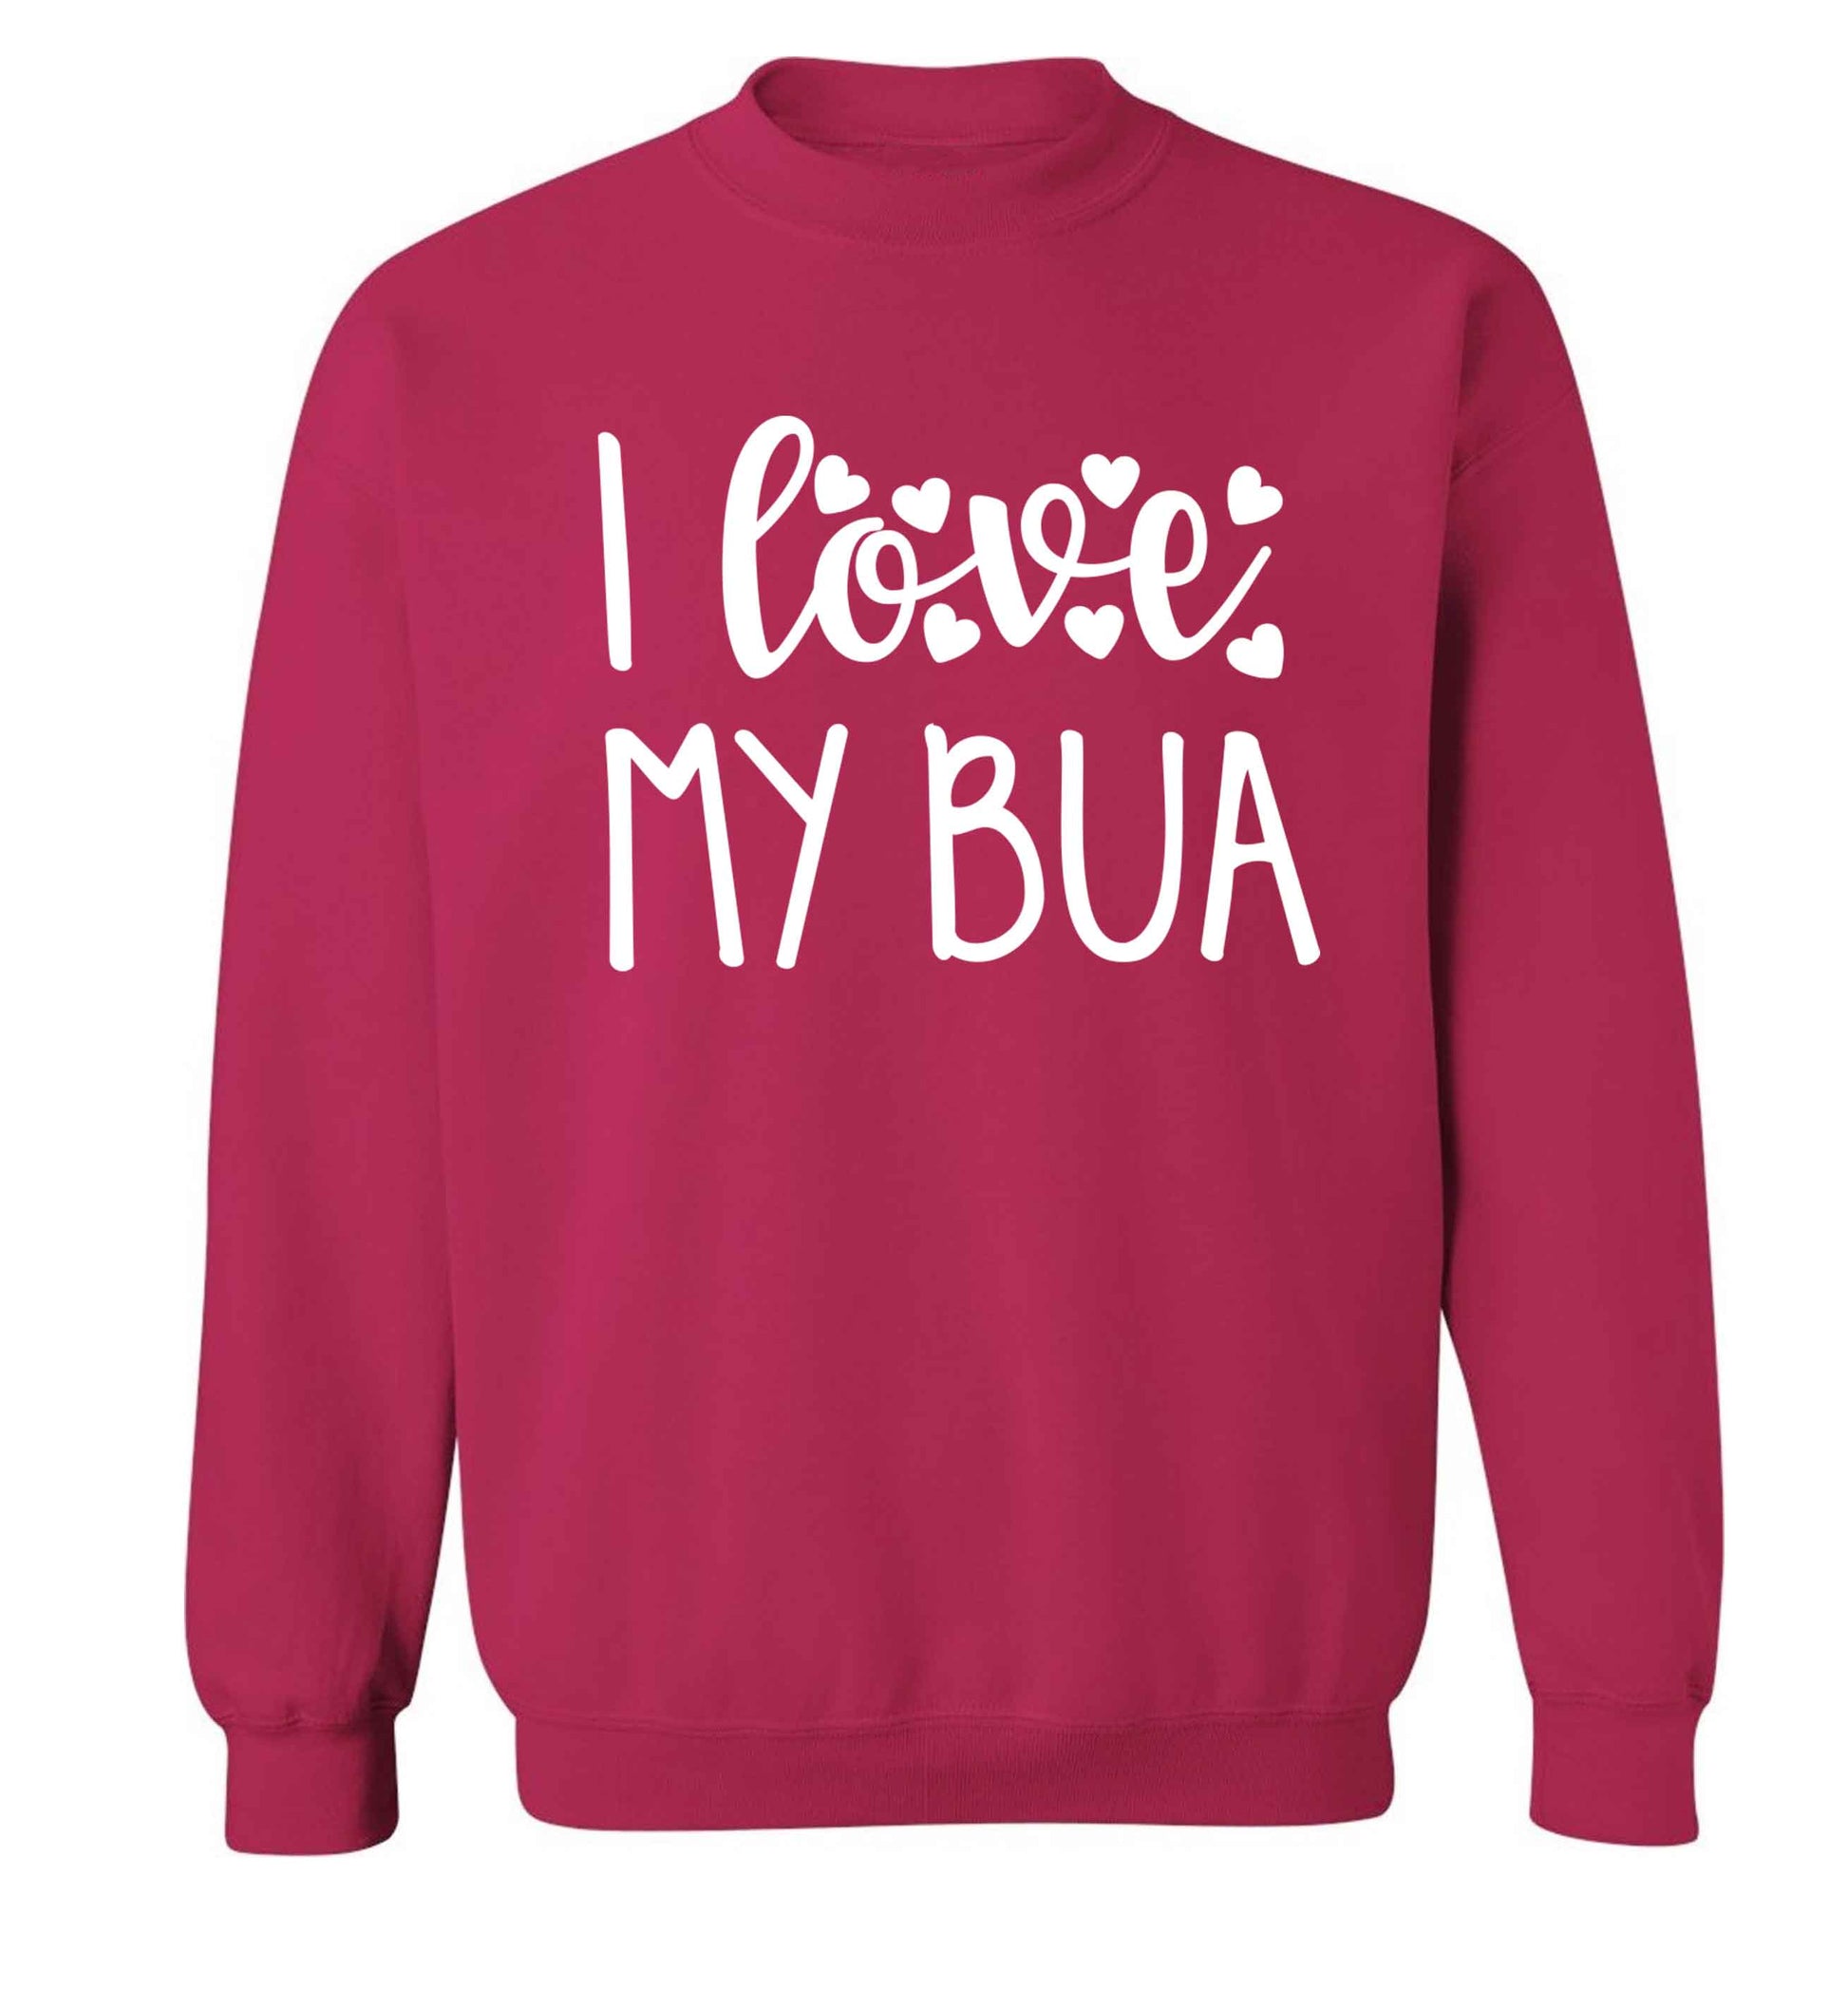 I love my bua Adult's unisex pink Sweater 2XL